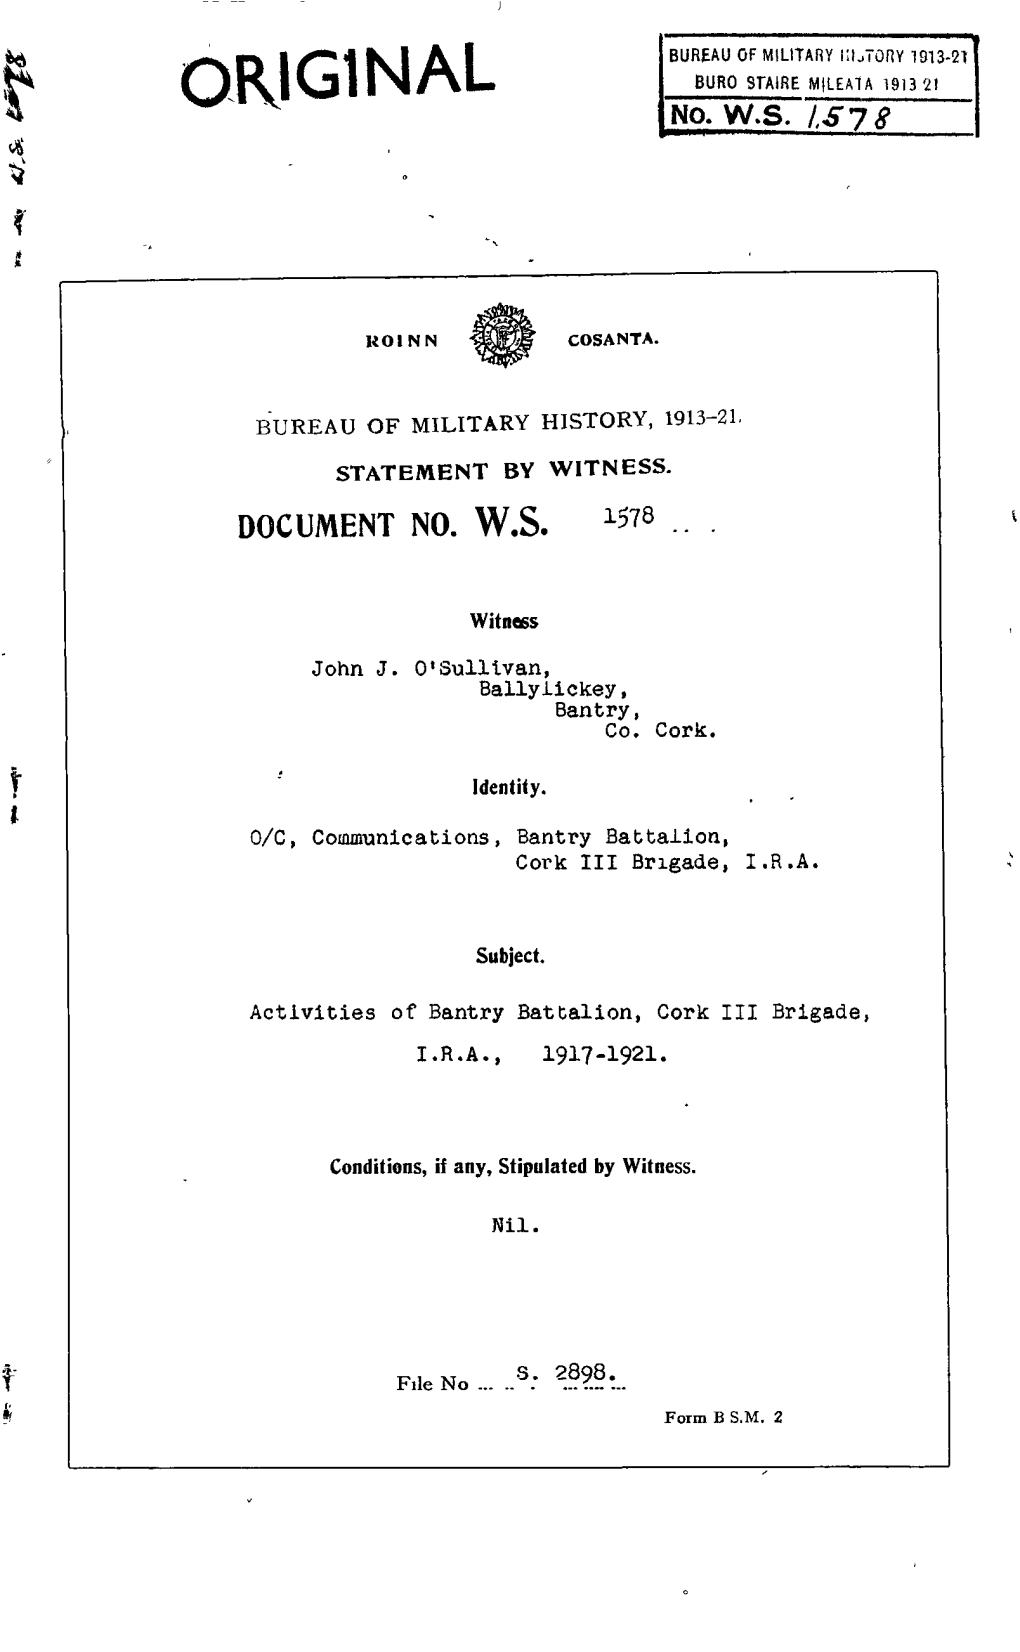 ROINN COSANTA. BUREAU of MILITARY HISTORY, 1913-21, STATEMENT by WITNESS, DOCUMENT NO. W.S. 1578 Witness John J. O'sullivan